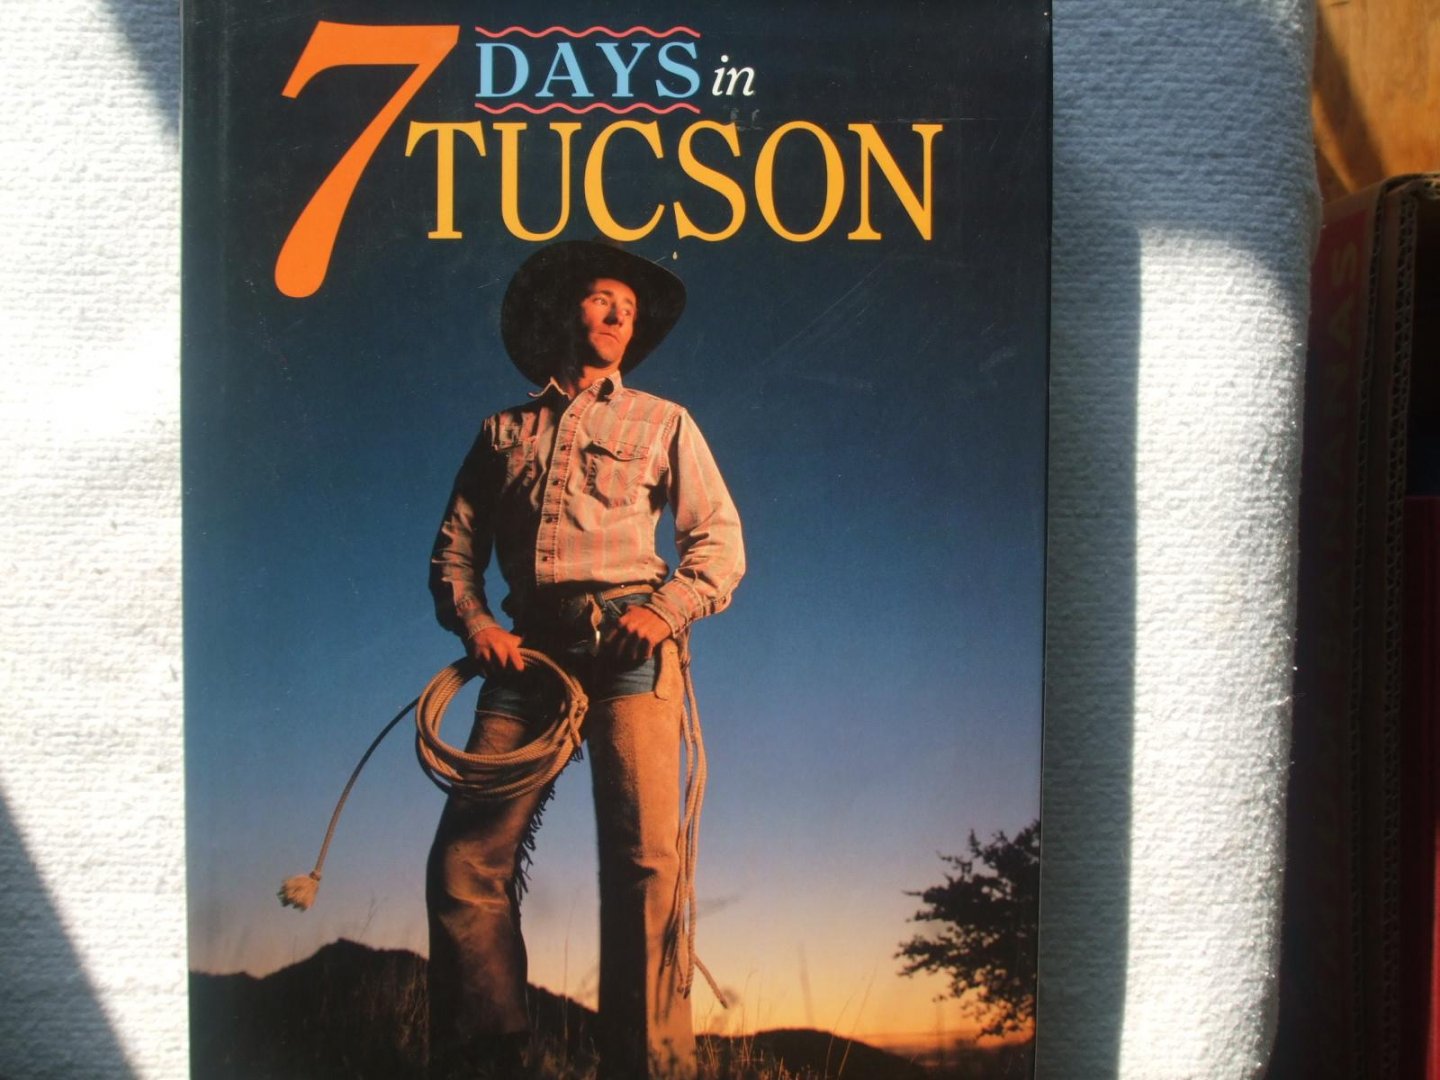 Rob Levin - 7 days in Tucson